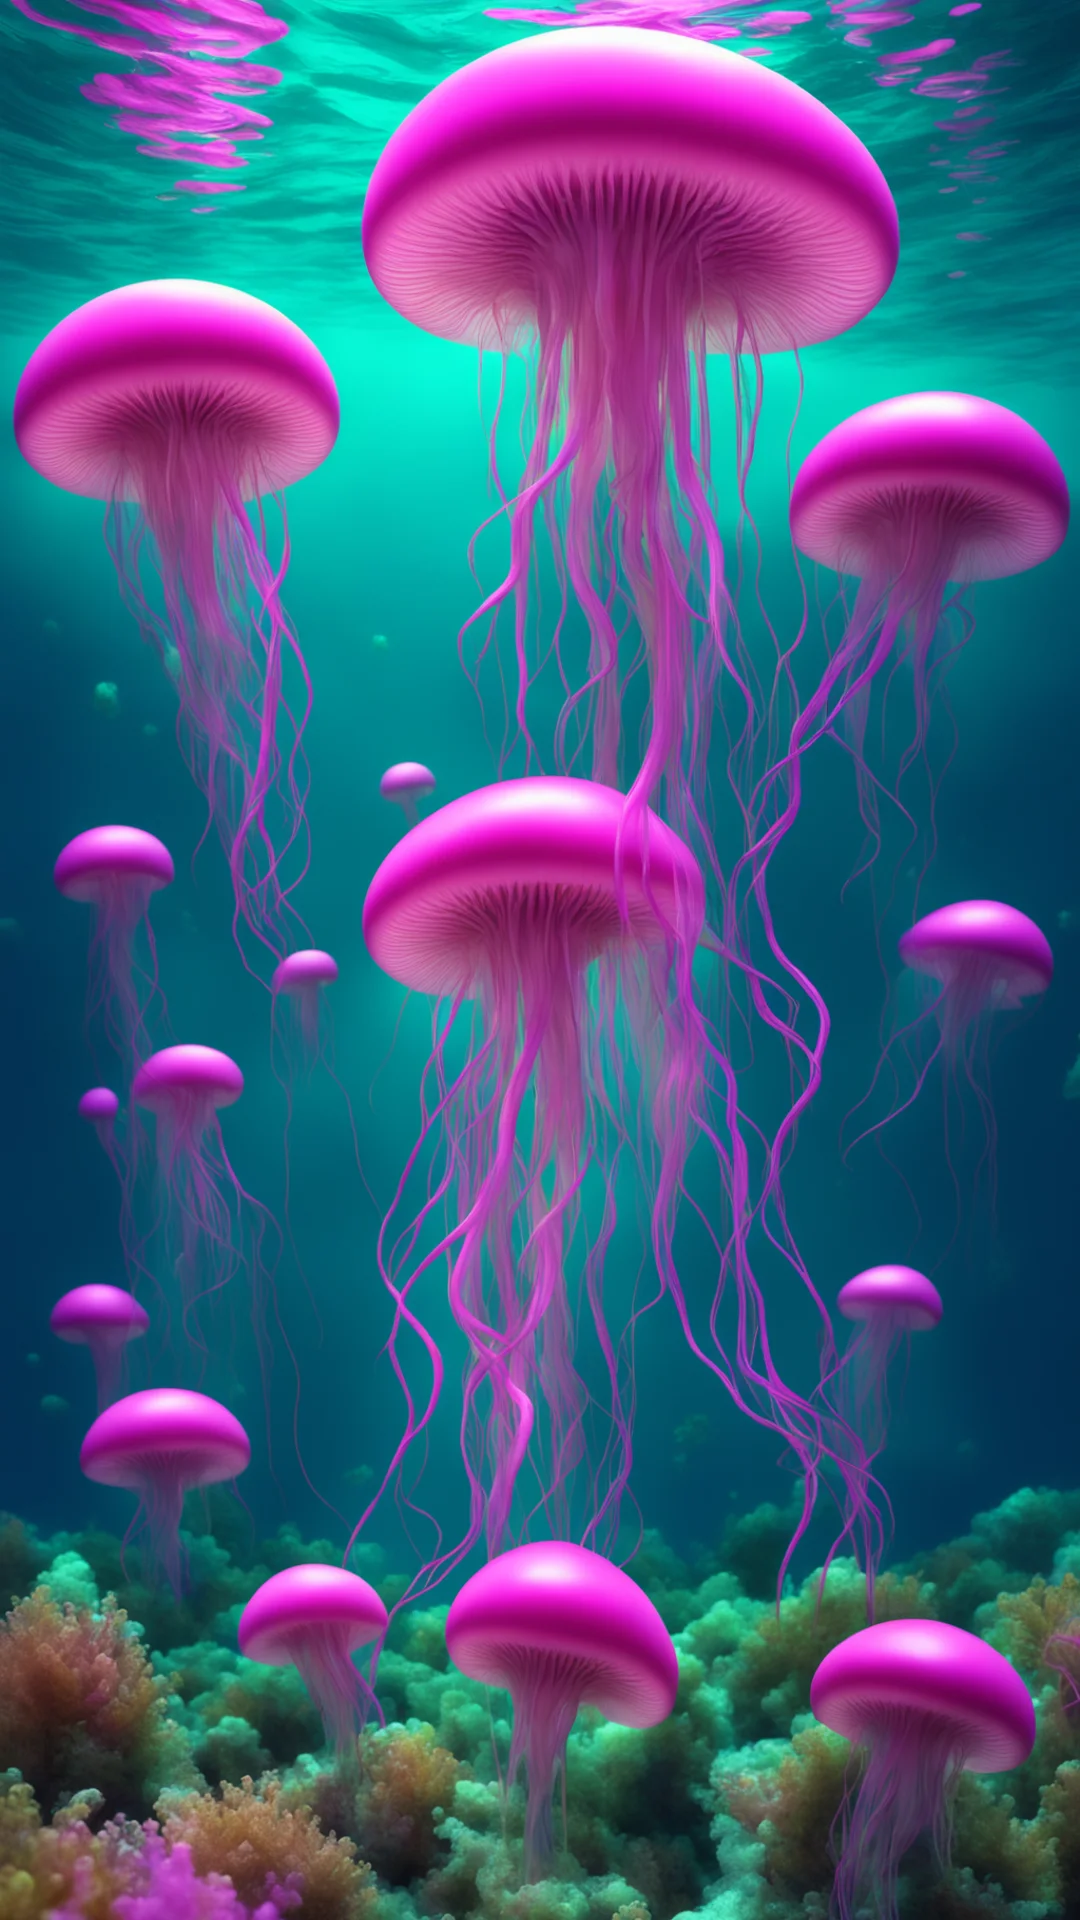 underwater full of strange jellyfish colorful cgi 3d surreal tall